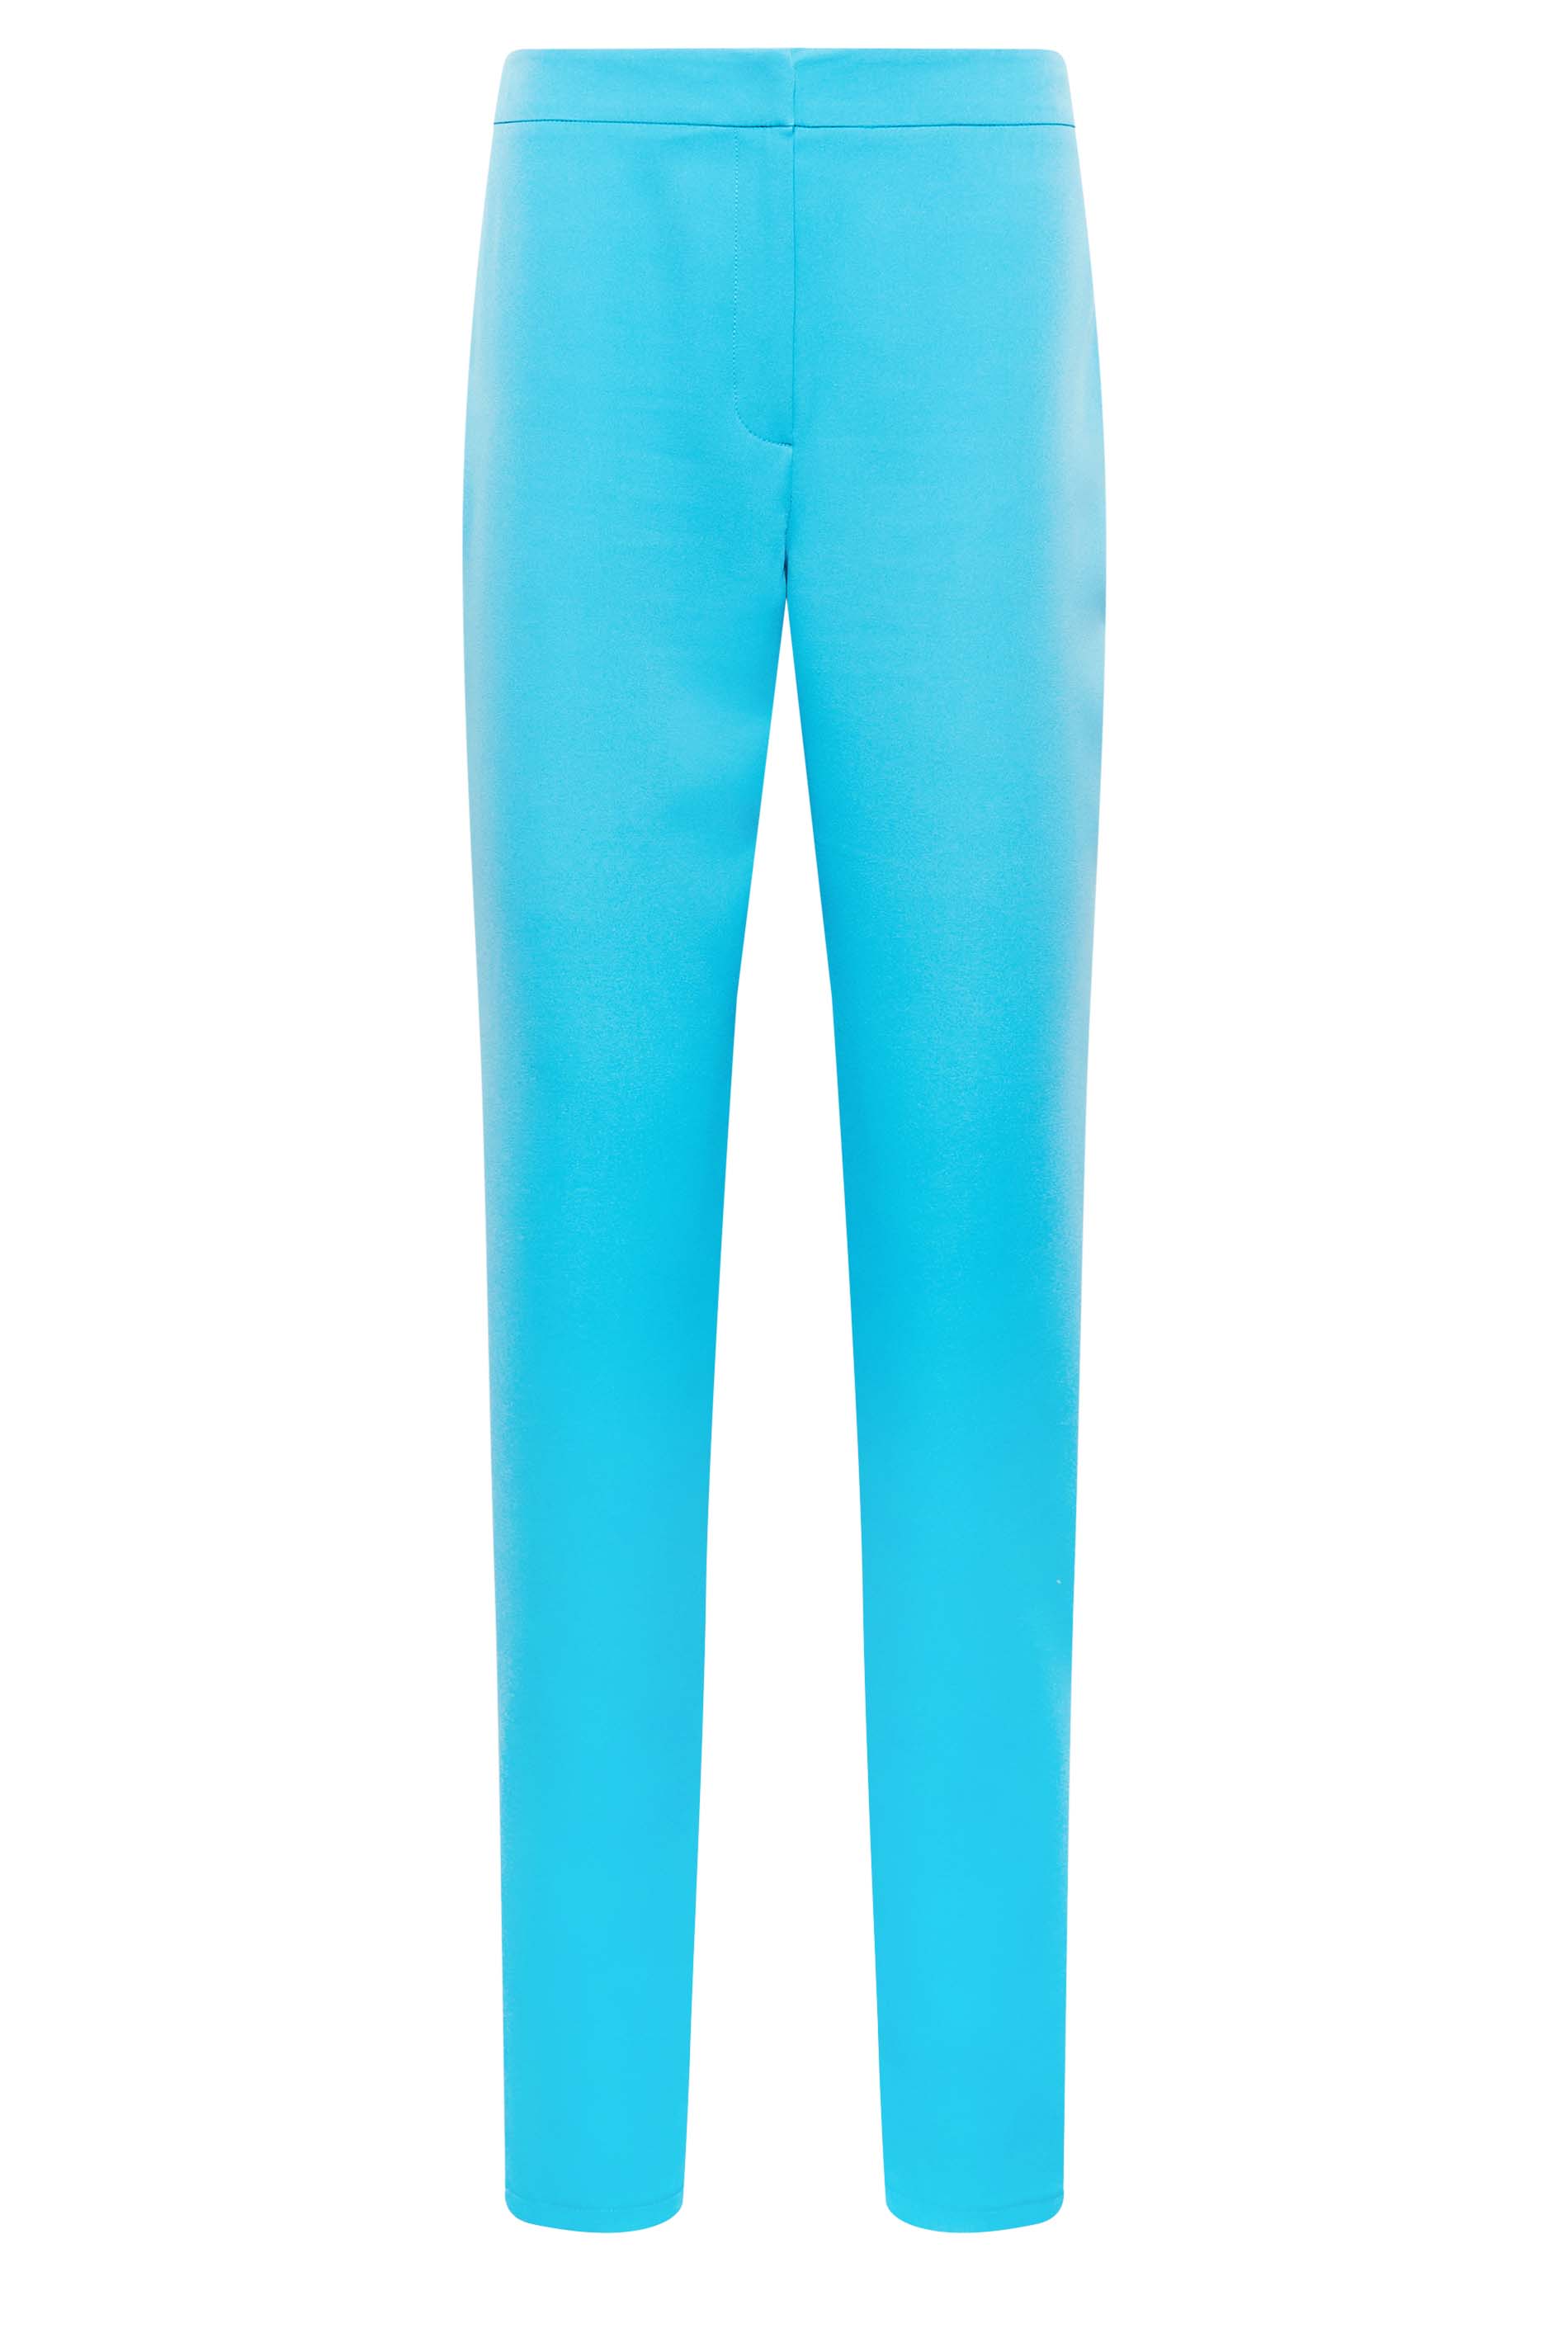 LTS Tall Women's Bright Blue Slim Leg Trousers | Long Tall Sally 2